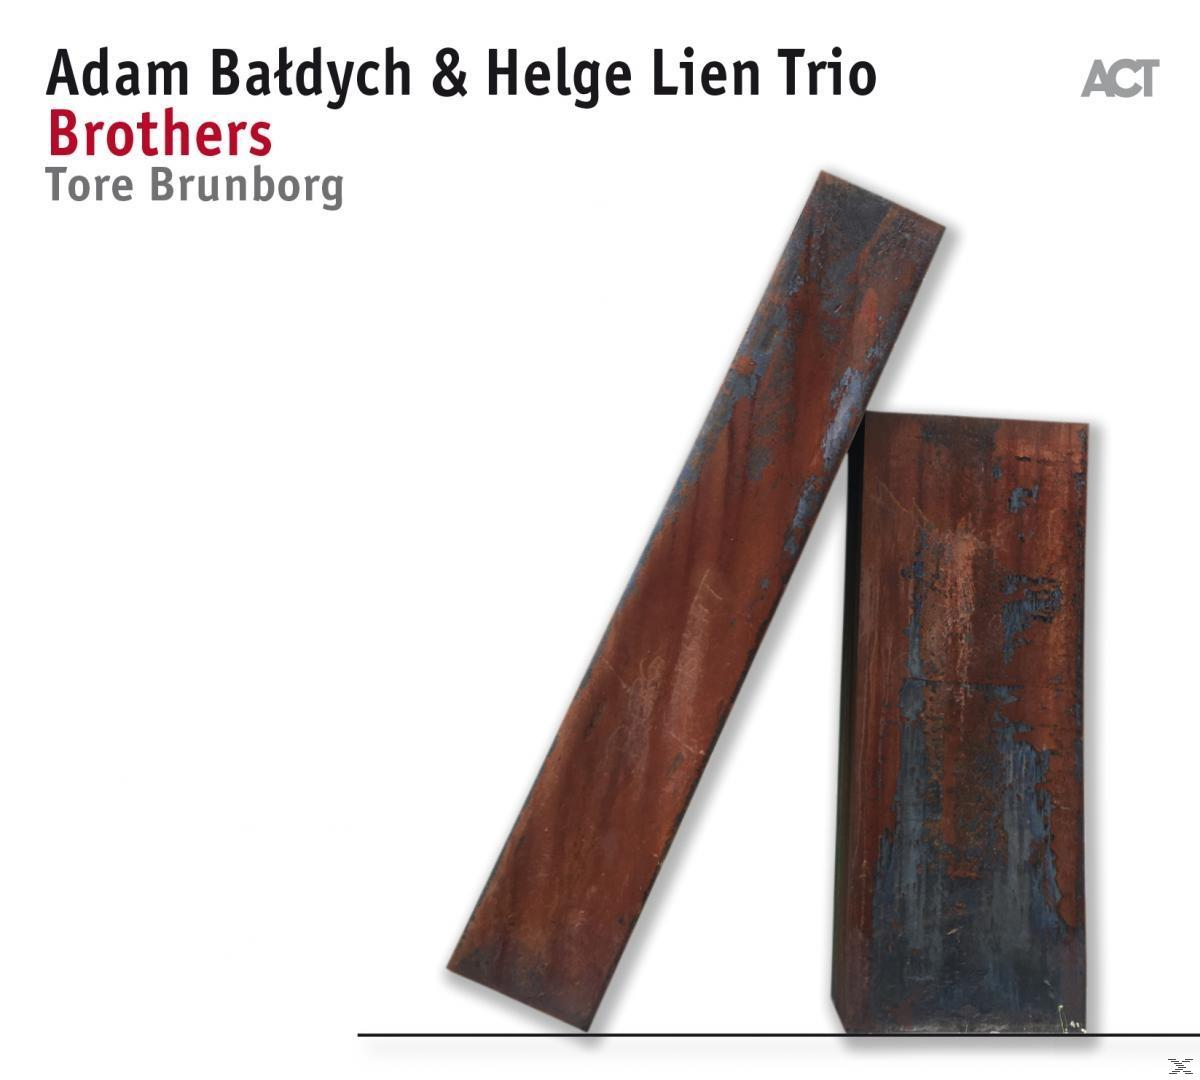 Adam & (LP Brothers Trio Lien Helge - - Download) + Baldych